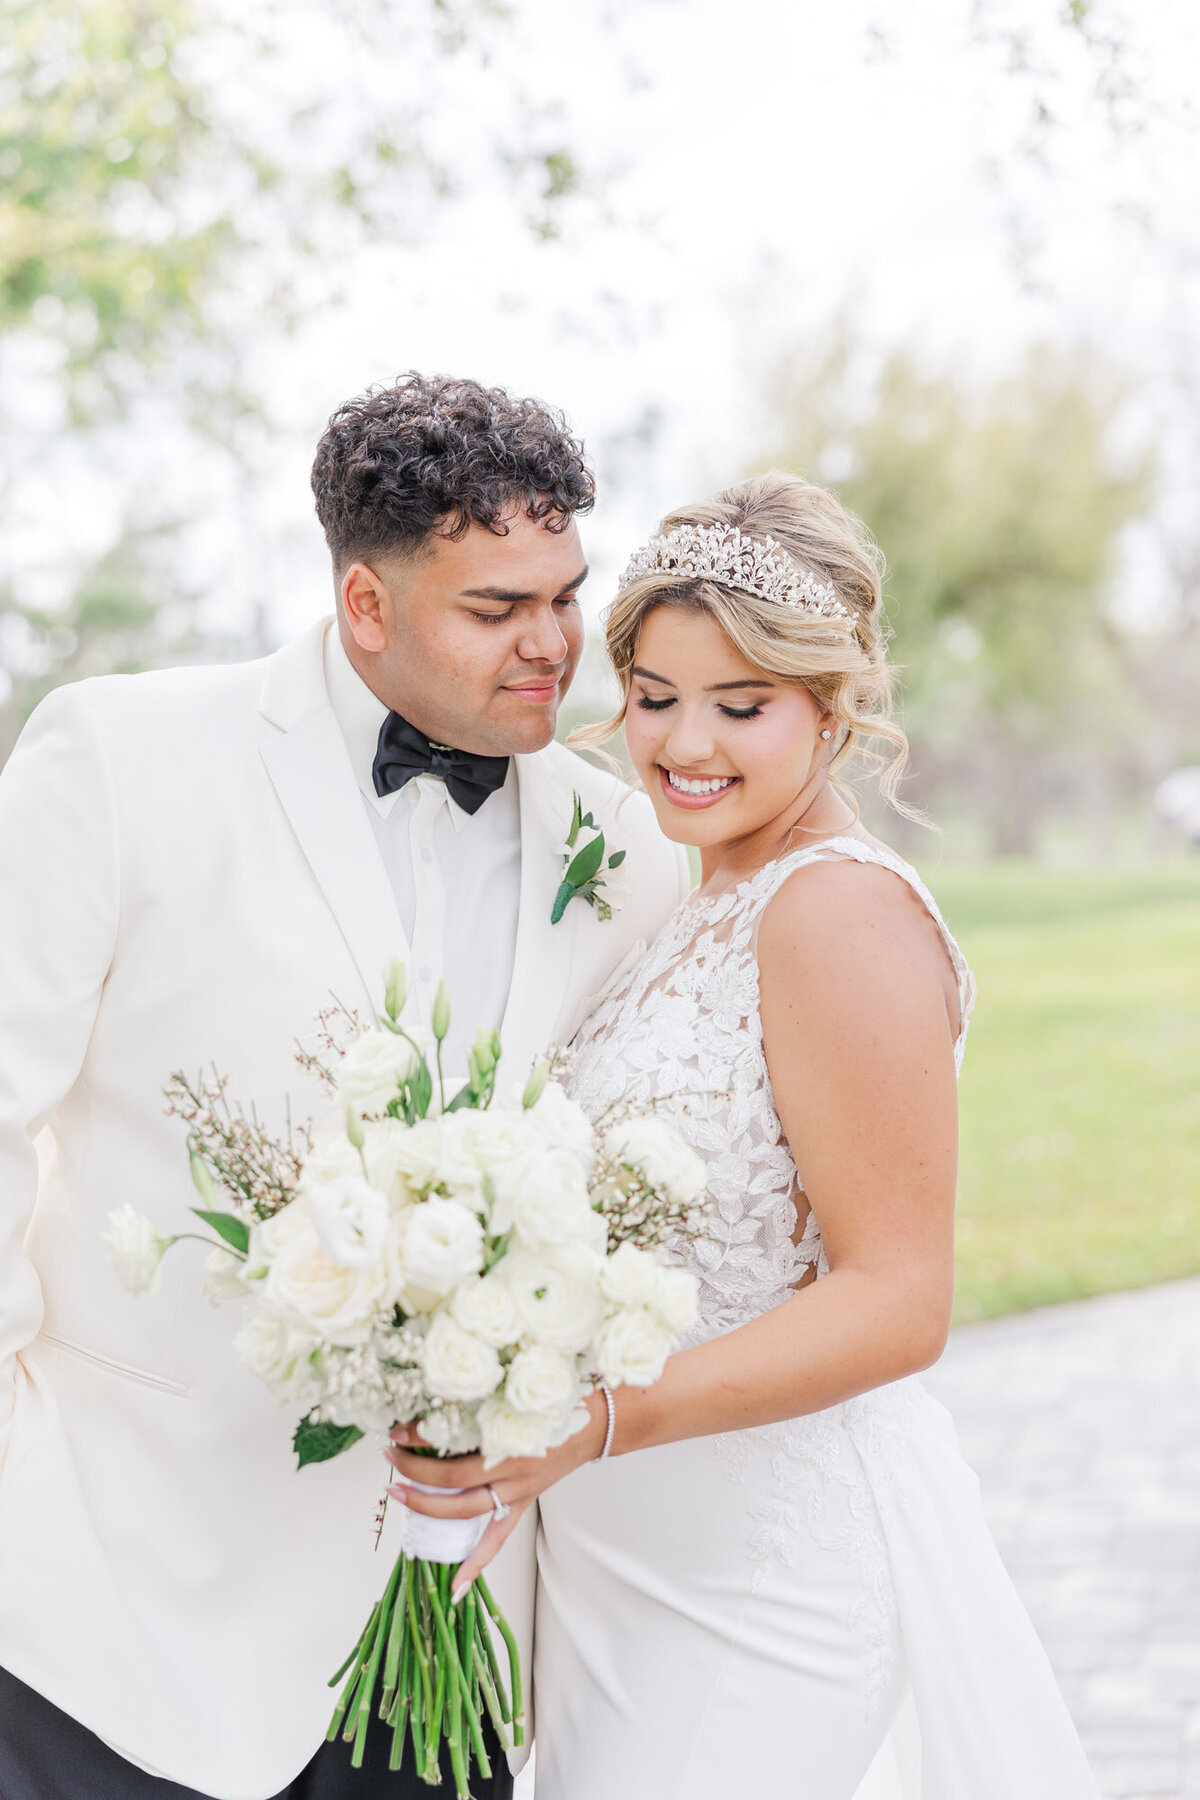 Chloe & Emerson - South Florida Wedding - Deanna Grace Photography -9